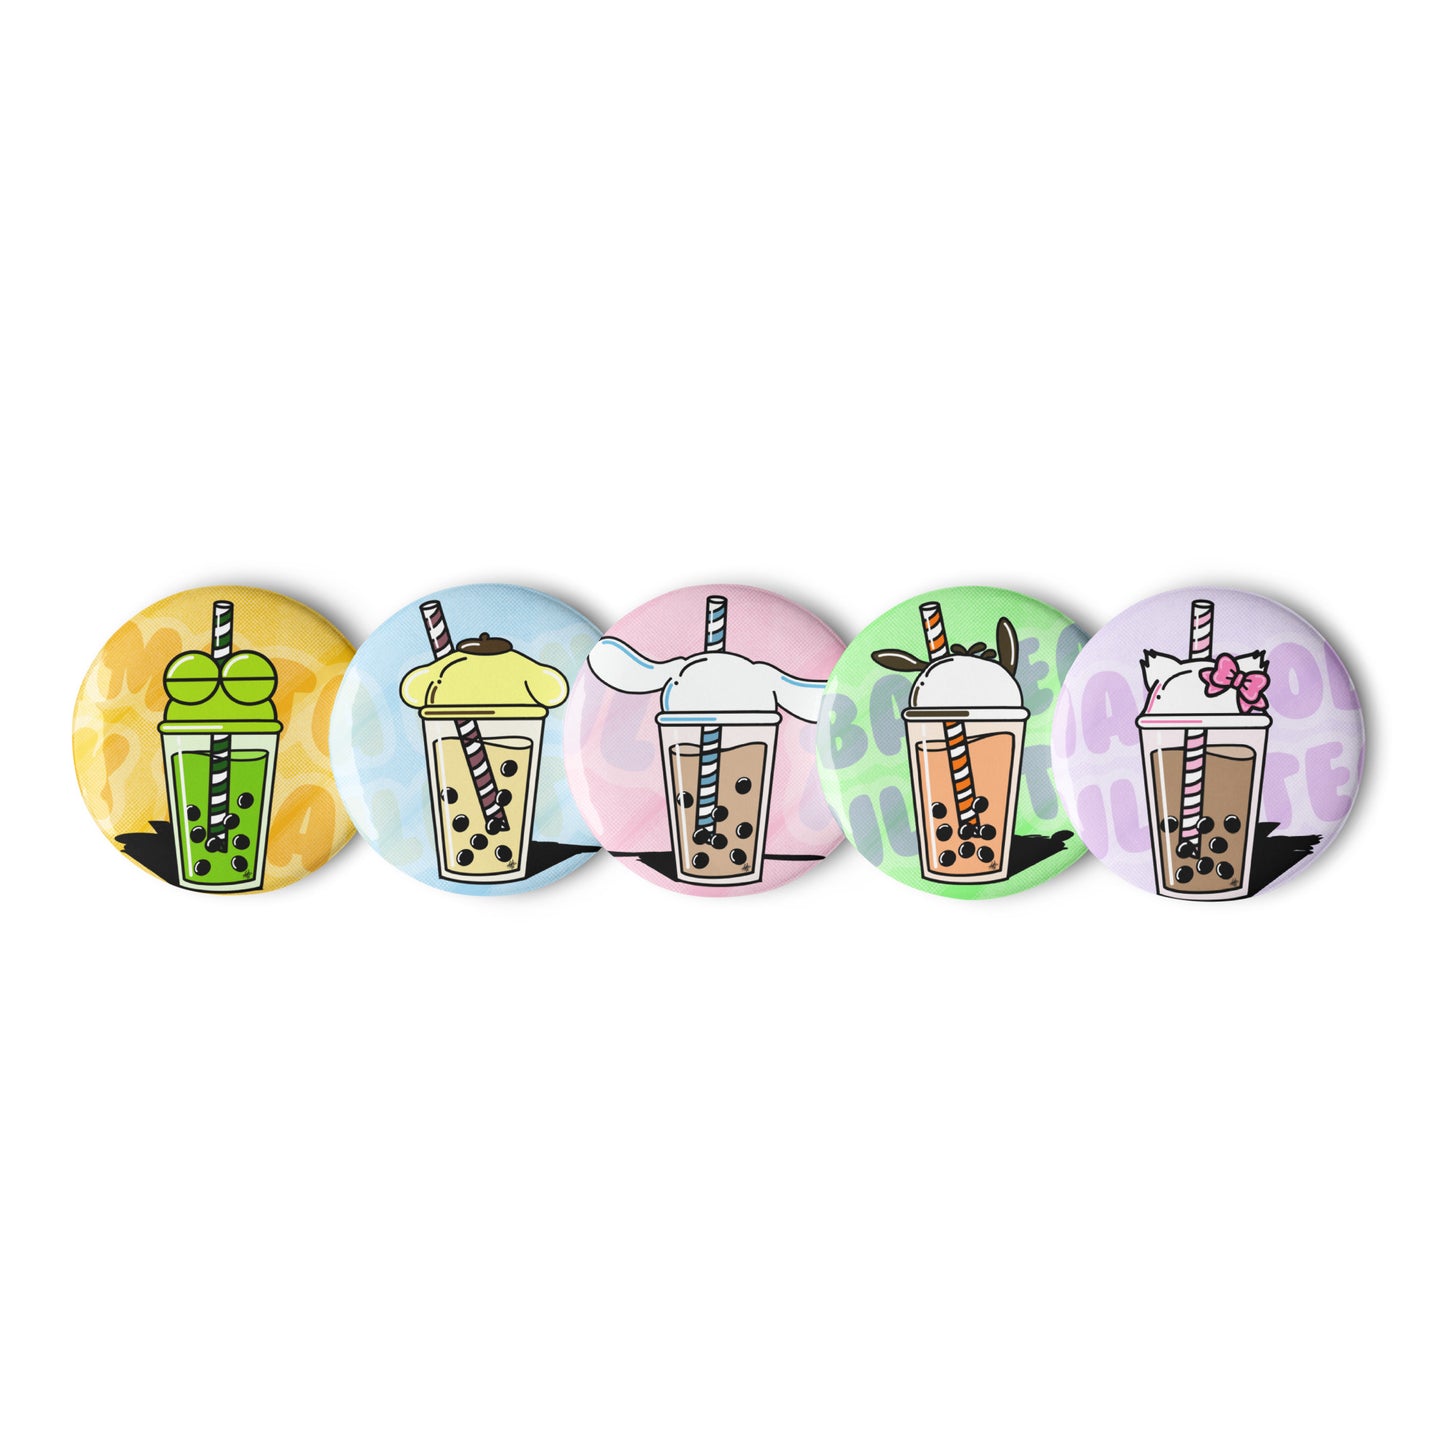 Boba Tea Flavors Button Set V2